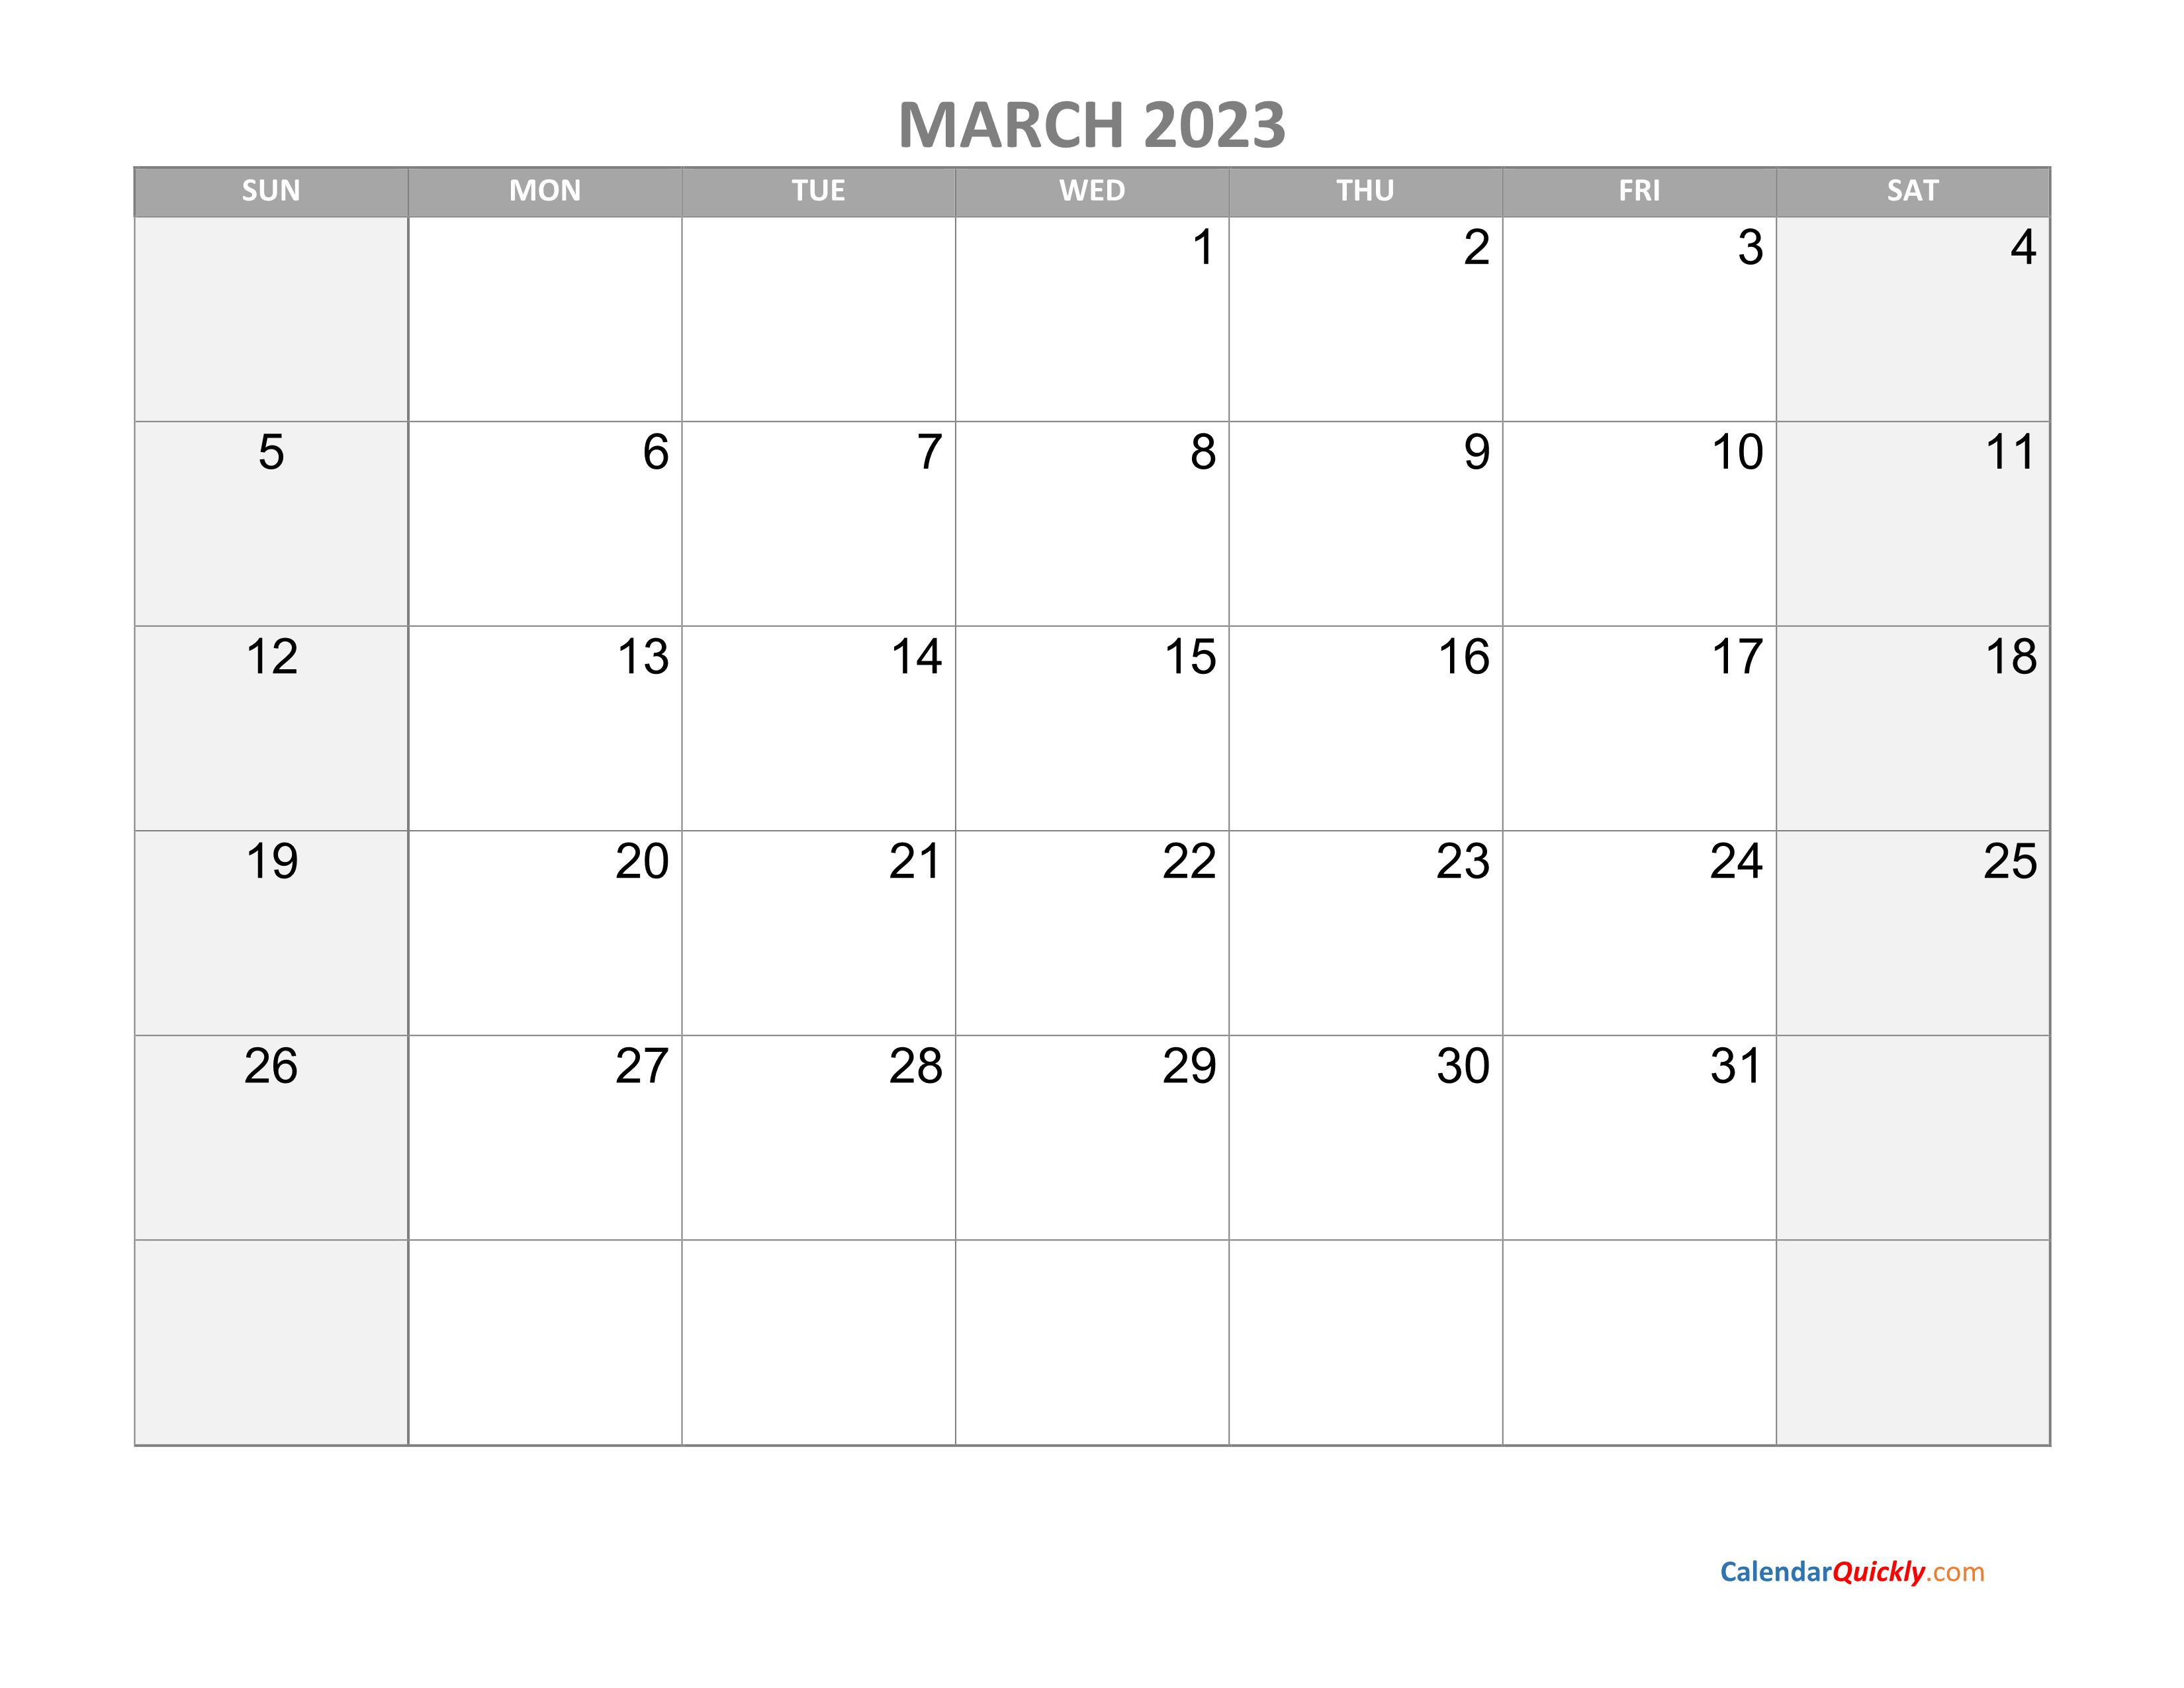 March Calendar 2023 with Holidays Calendar Quickly